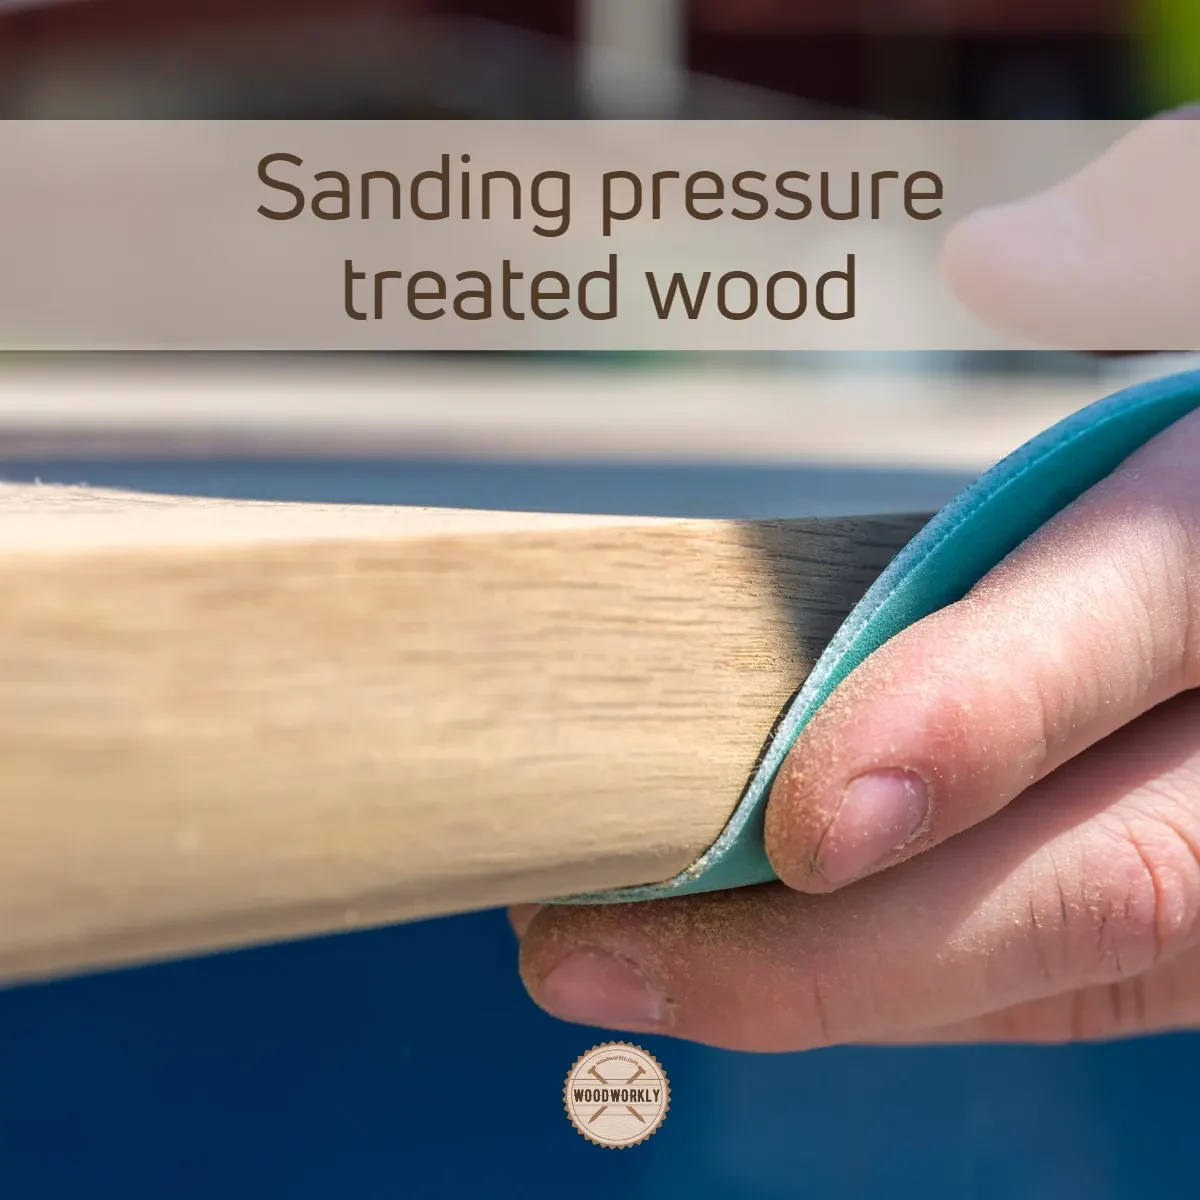 Sanding pressure treated wood to remove green algae